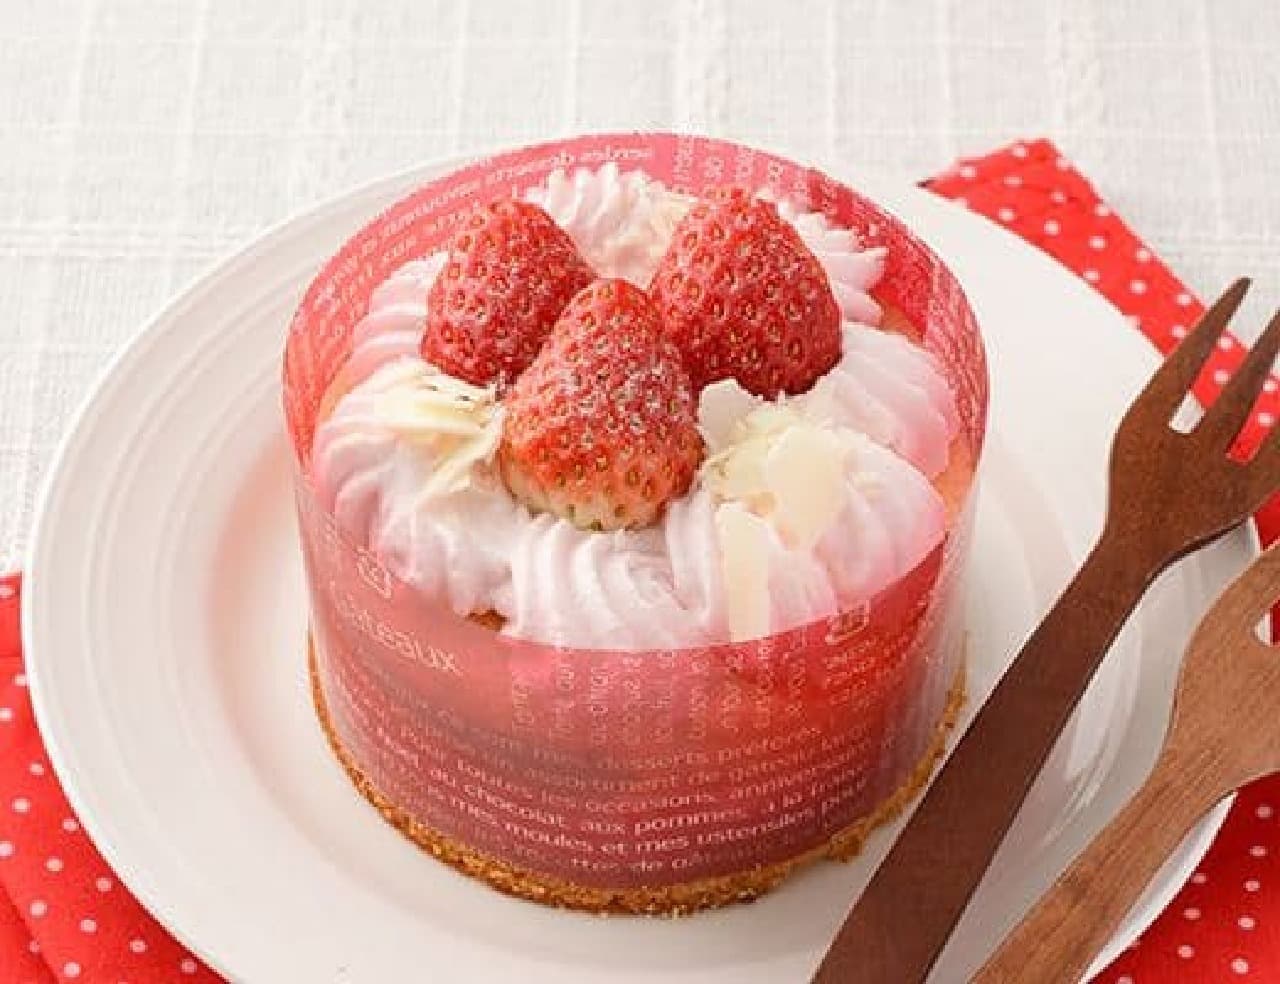 Lawson "Strawberry Cake